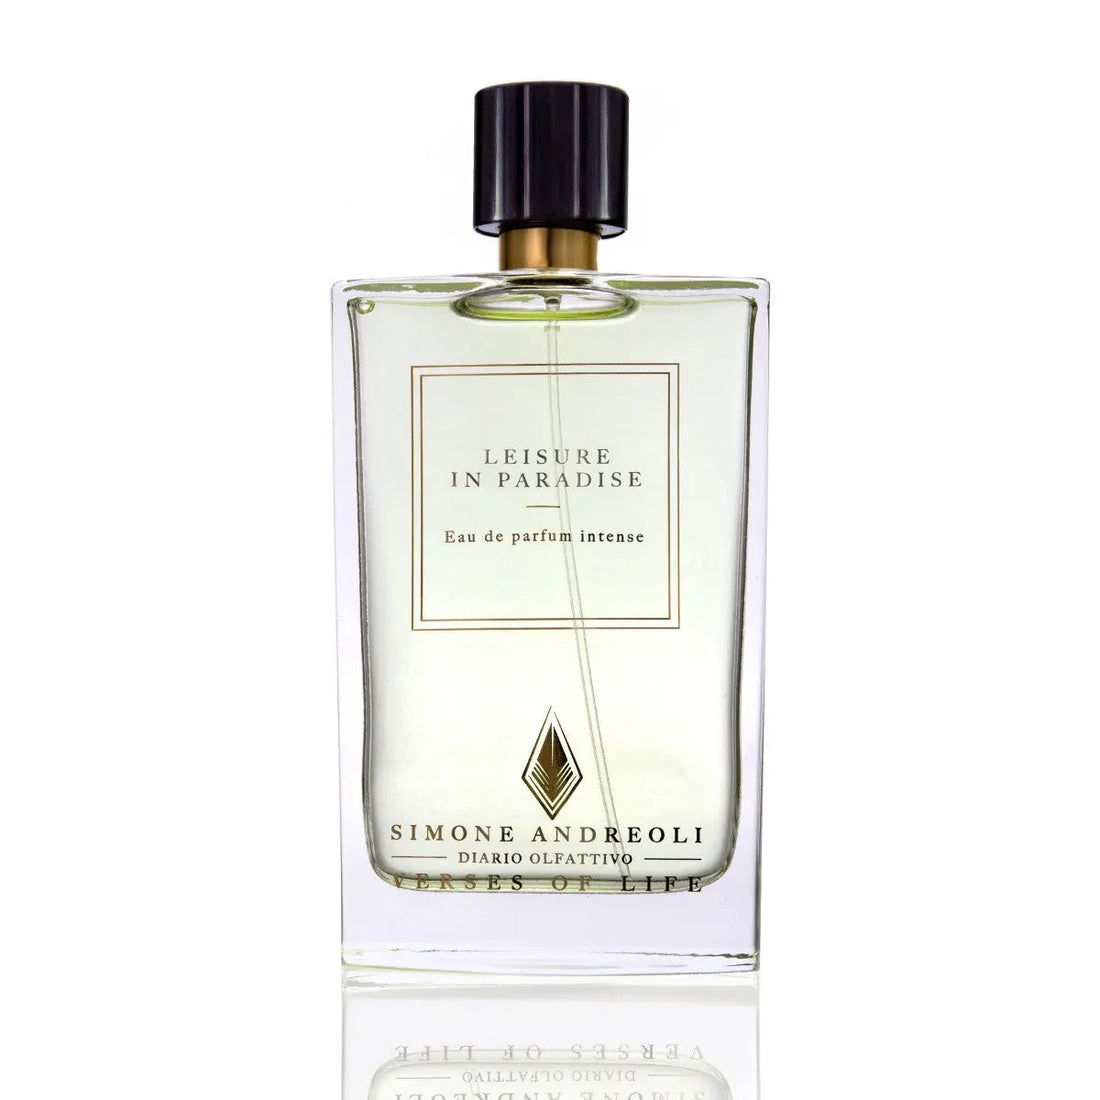 Simone Andreoli Leisure in Paradise eau de Parfum intense - 100 ml